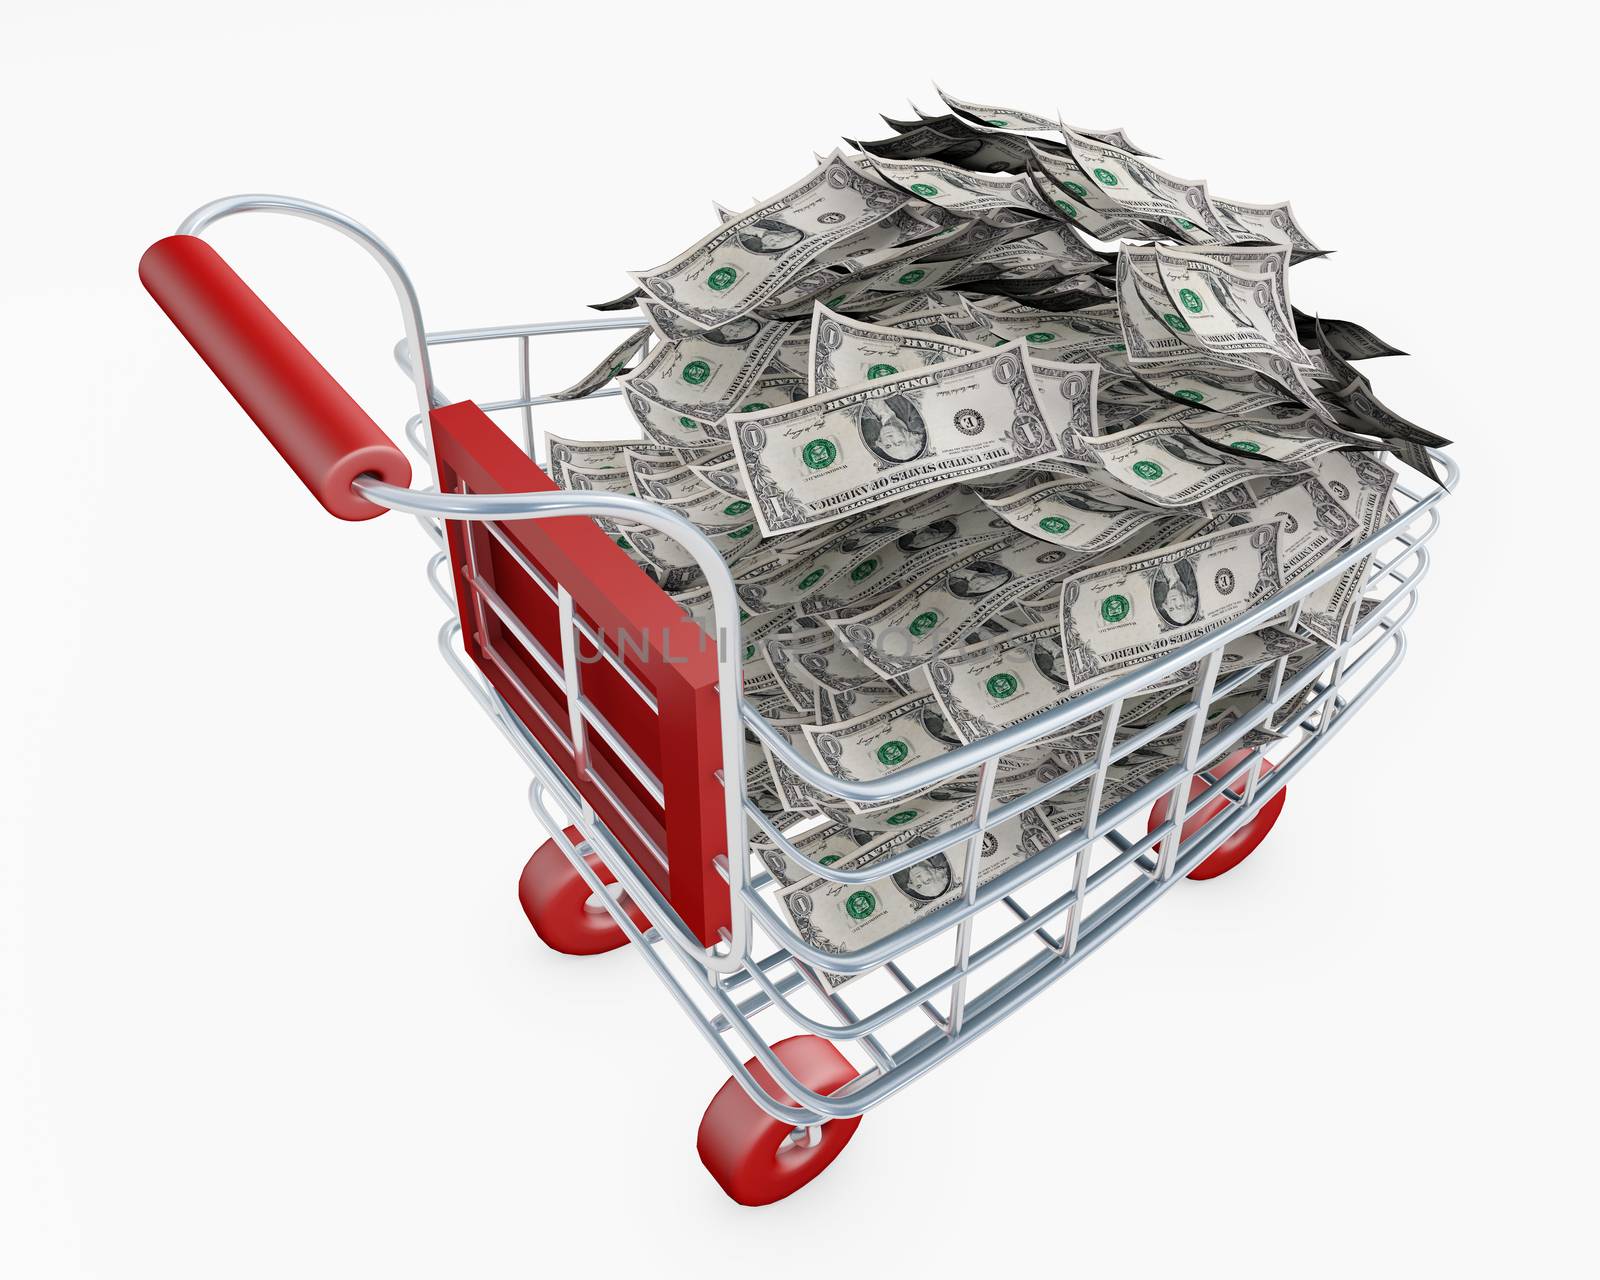 Shopping cart full of money us dollars 3d rendering by F1b0nacci